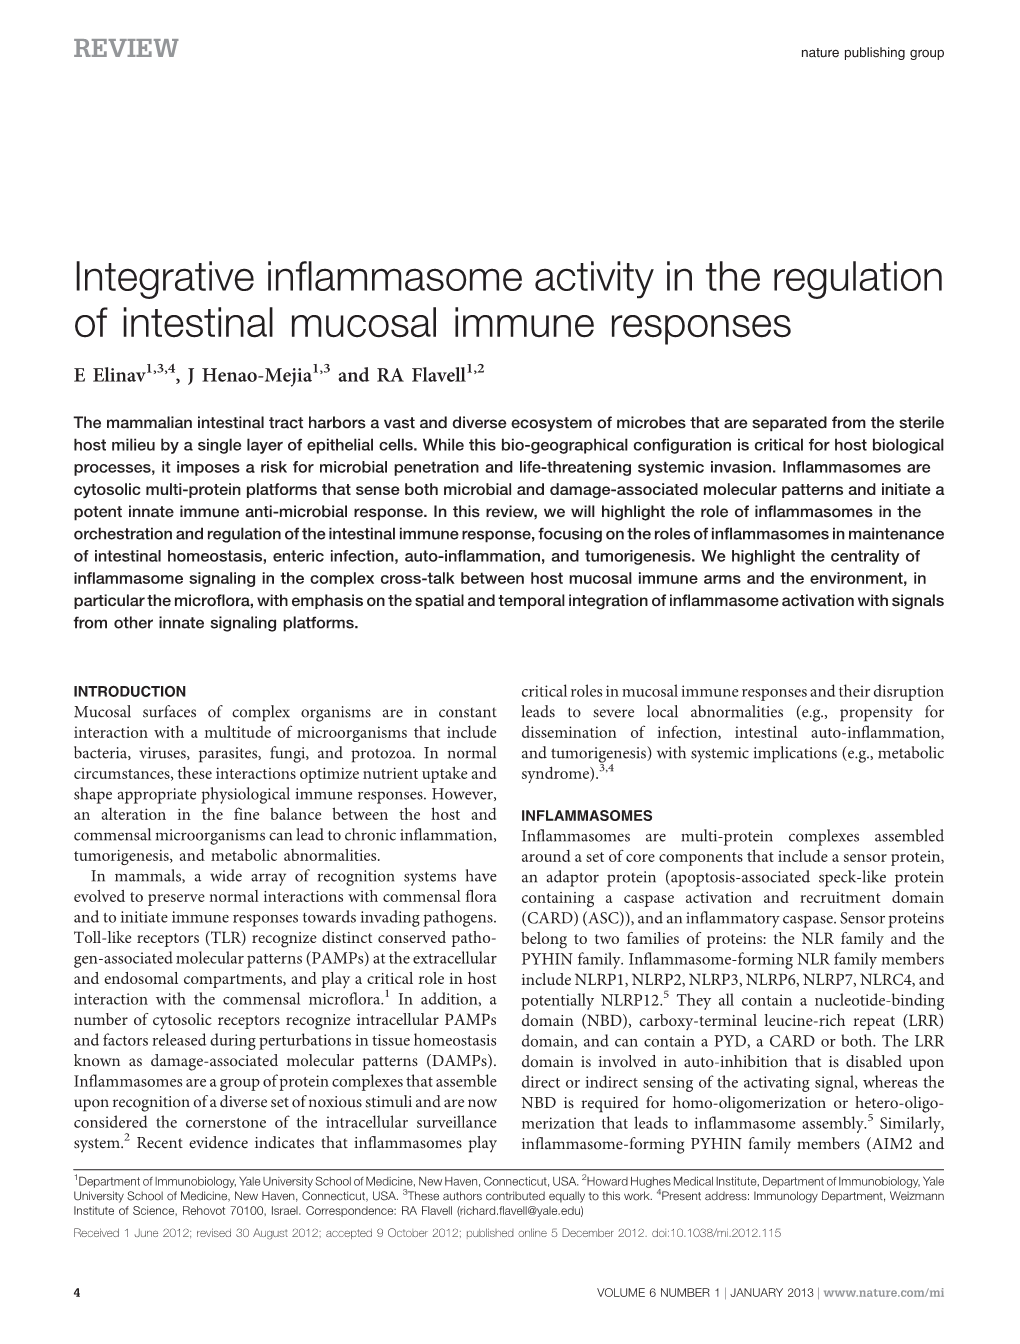 Integrative Inflammasome Activity in the Regulation of Intestinal Mucosal Immune Responses